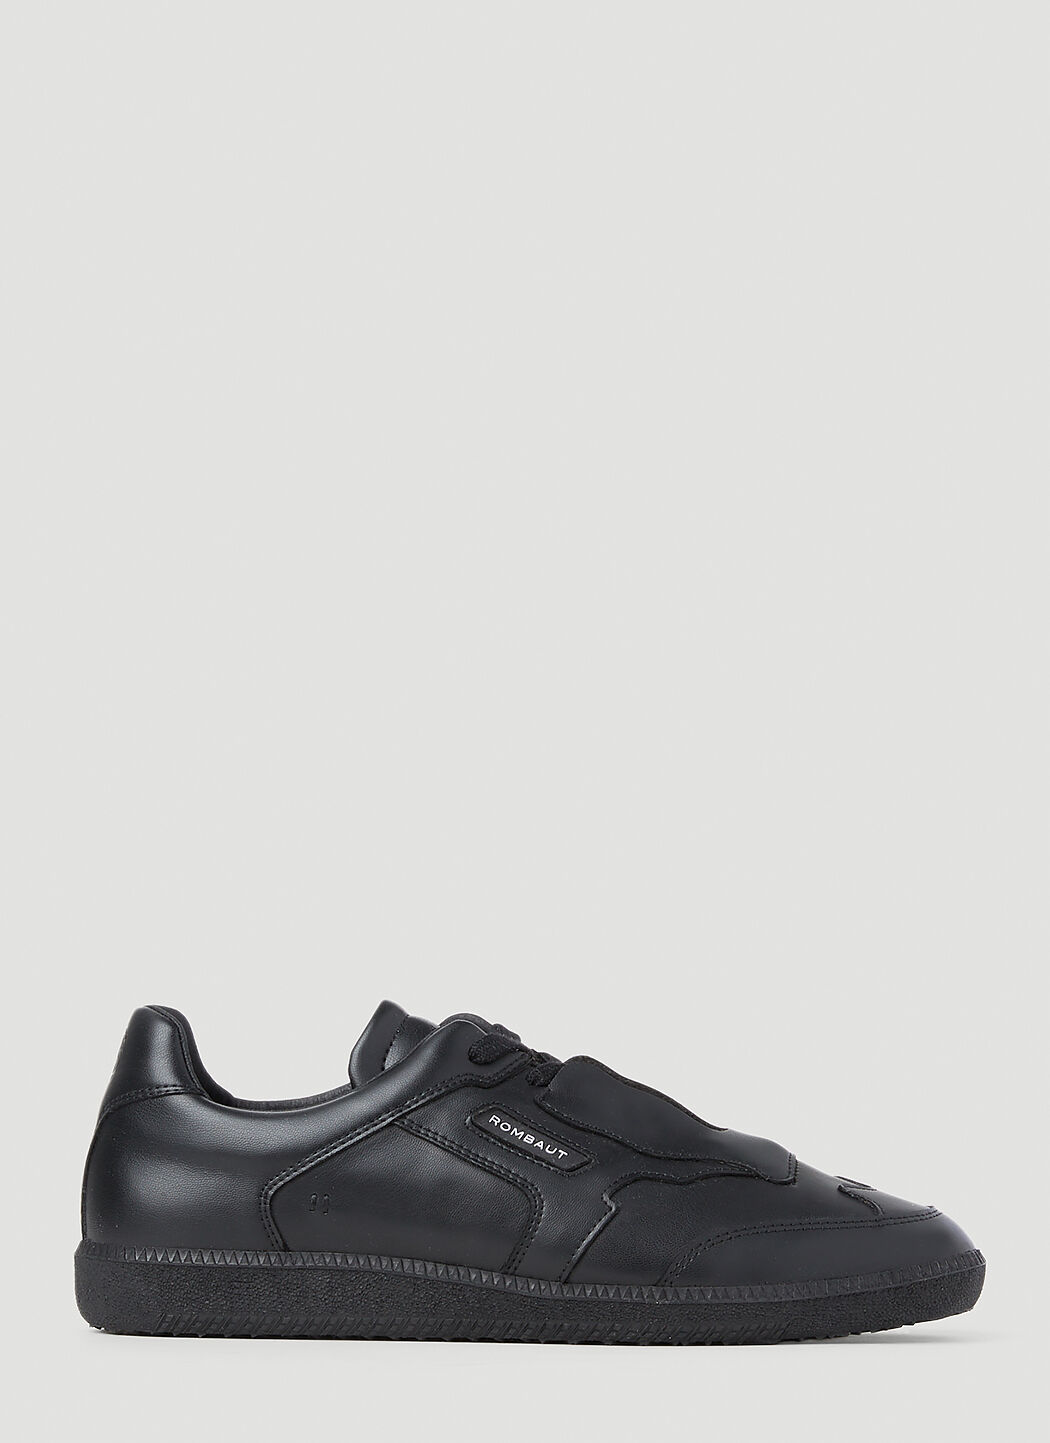 Rombaut Atmoz 运动鞋 黑色 rmb0244004